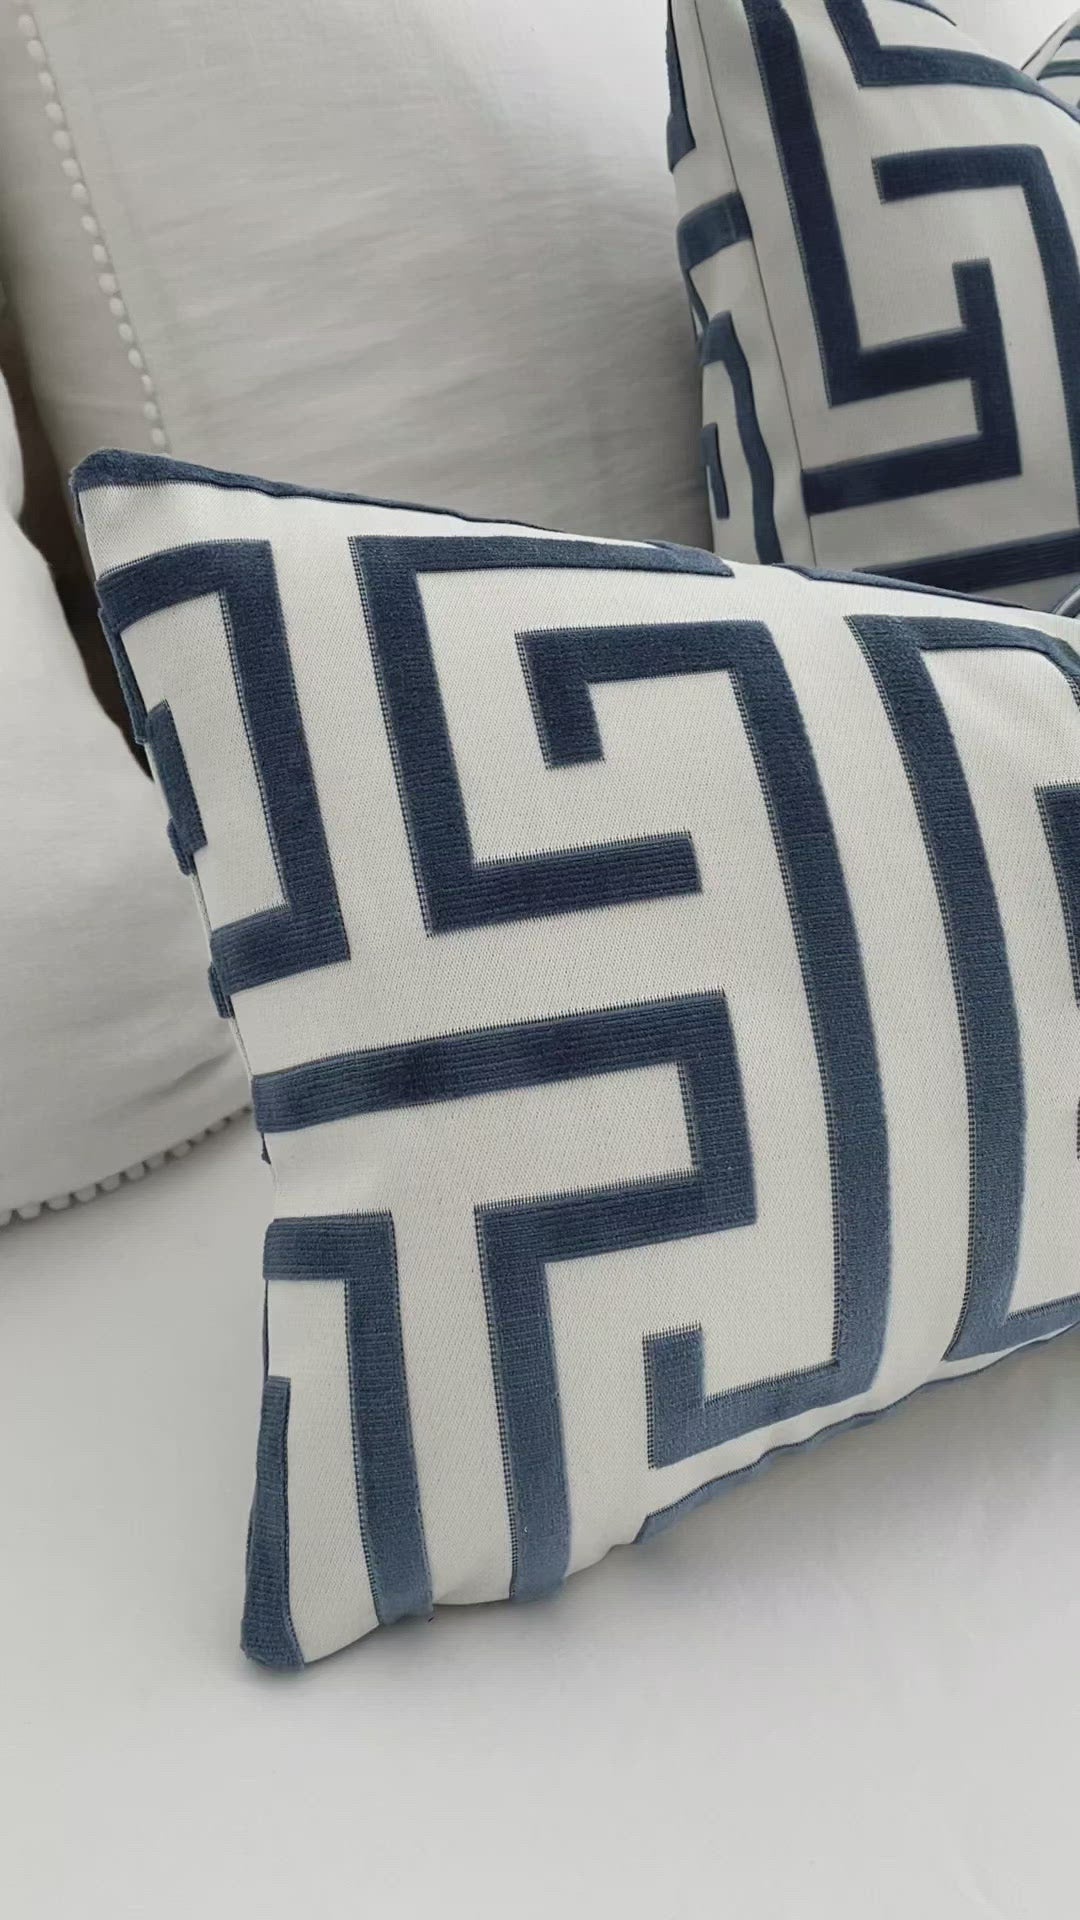 Thibaut Ming Trail Velvet Navy Blue Luxury Designer Throw Pillow Cover Product Video